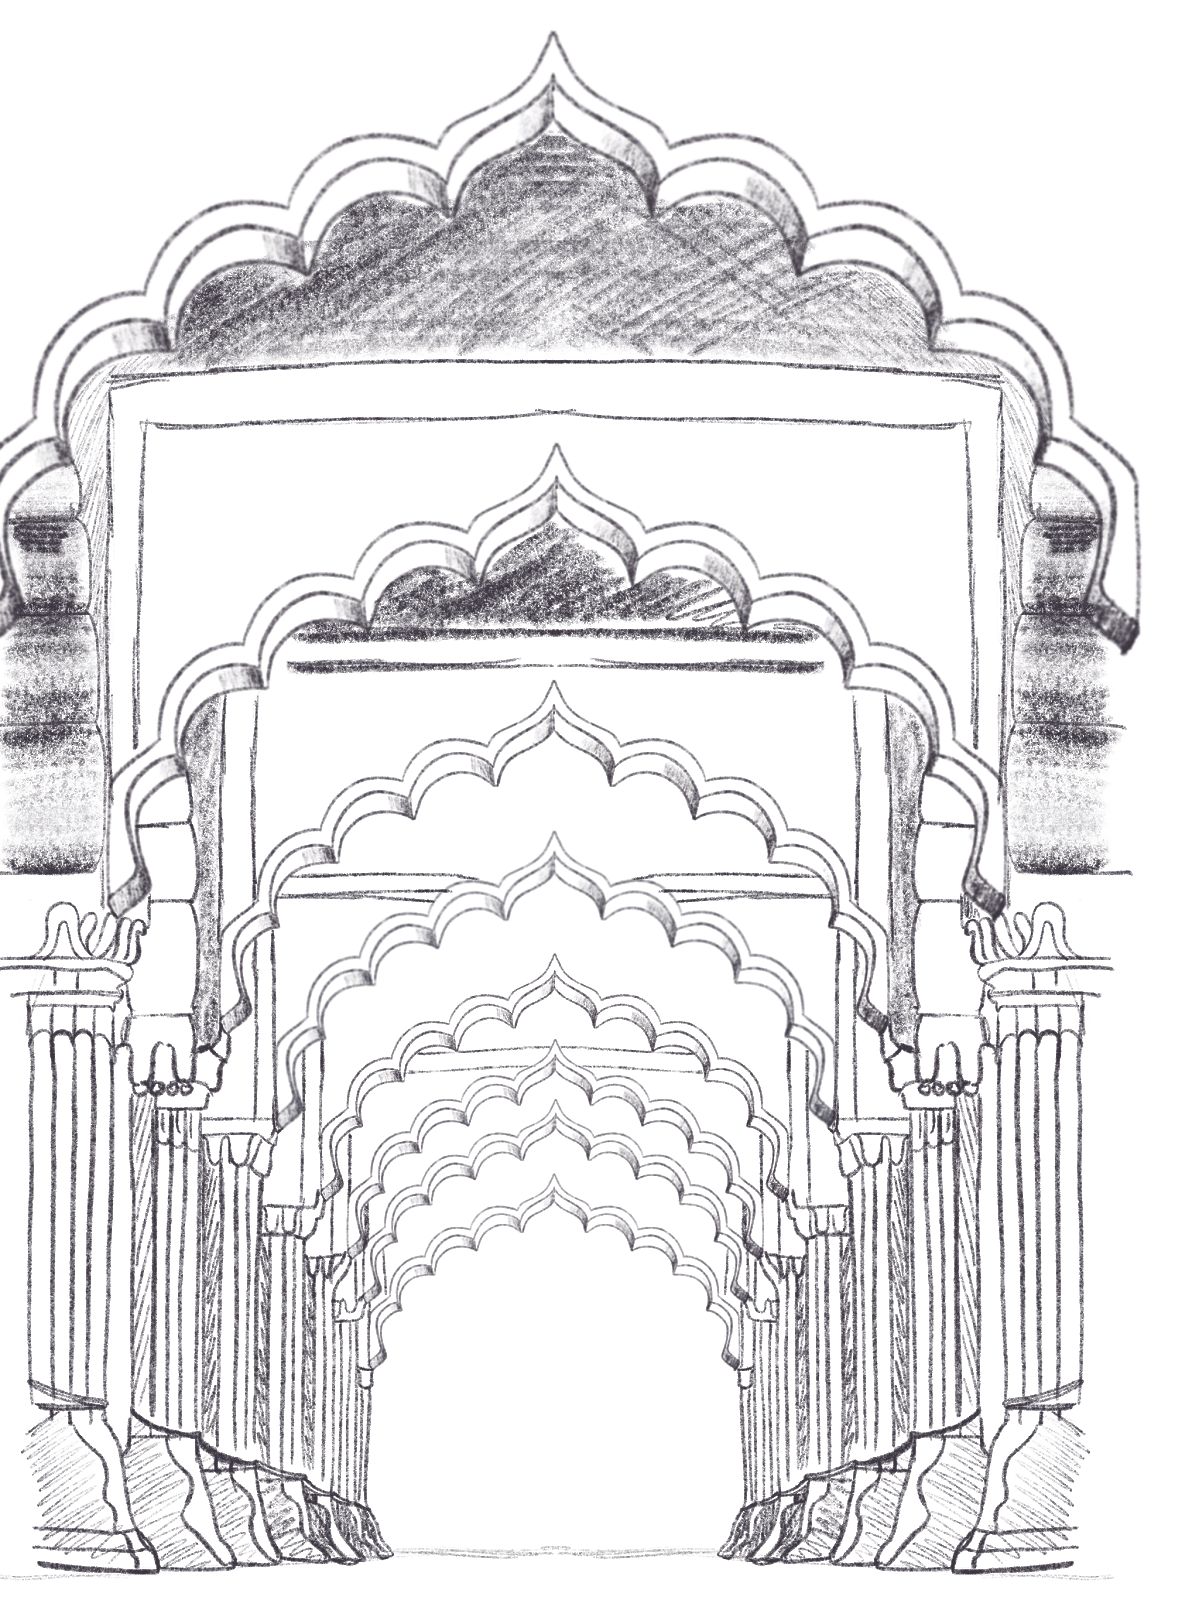 How I created Indian Monument illustrations - Design Tutorial